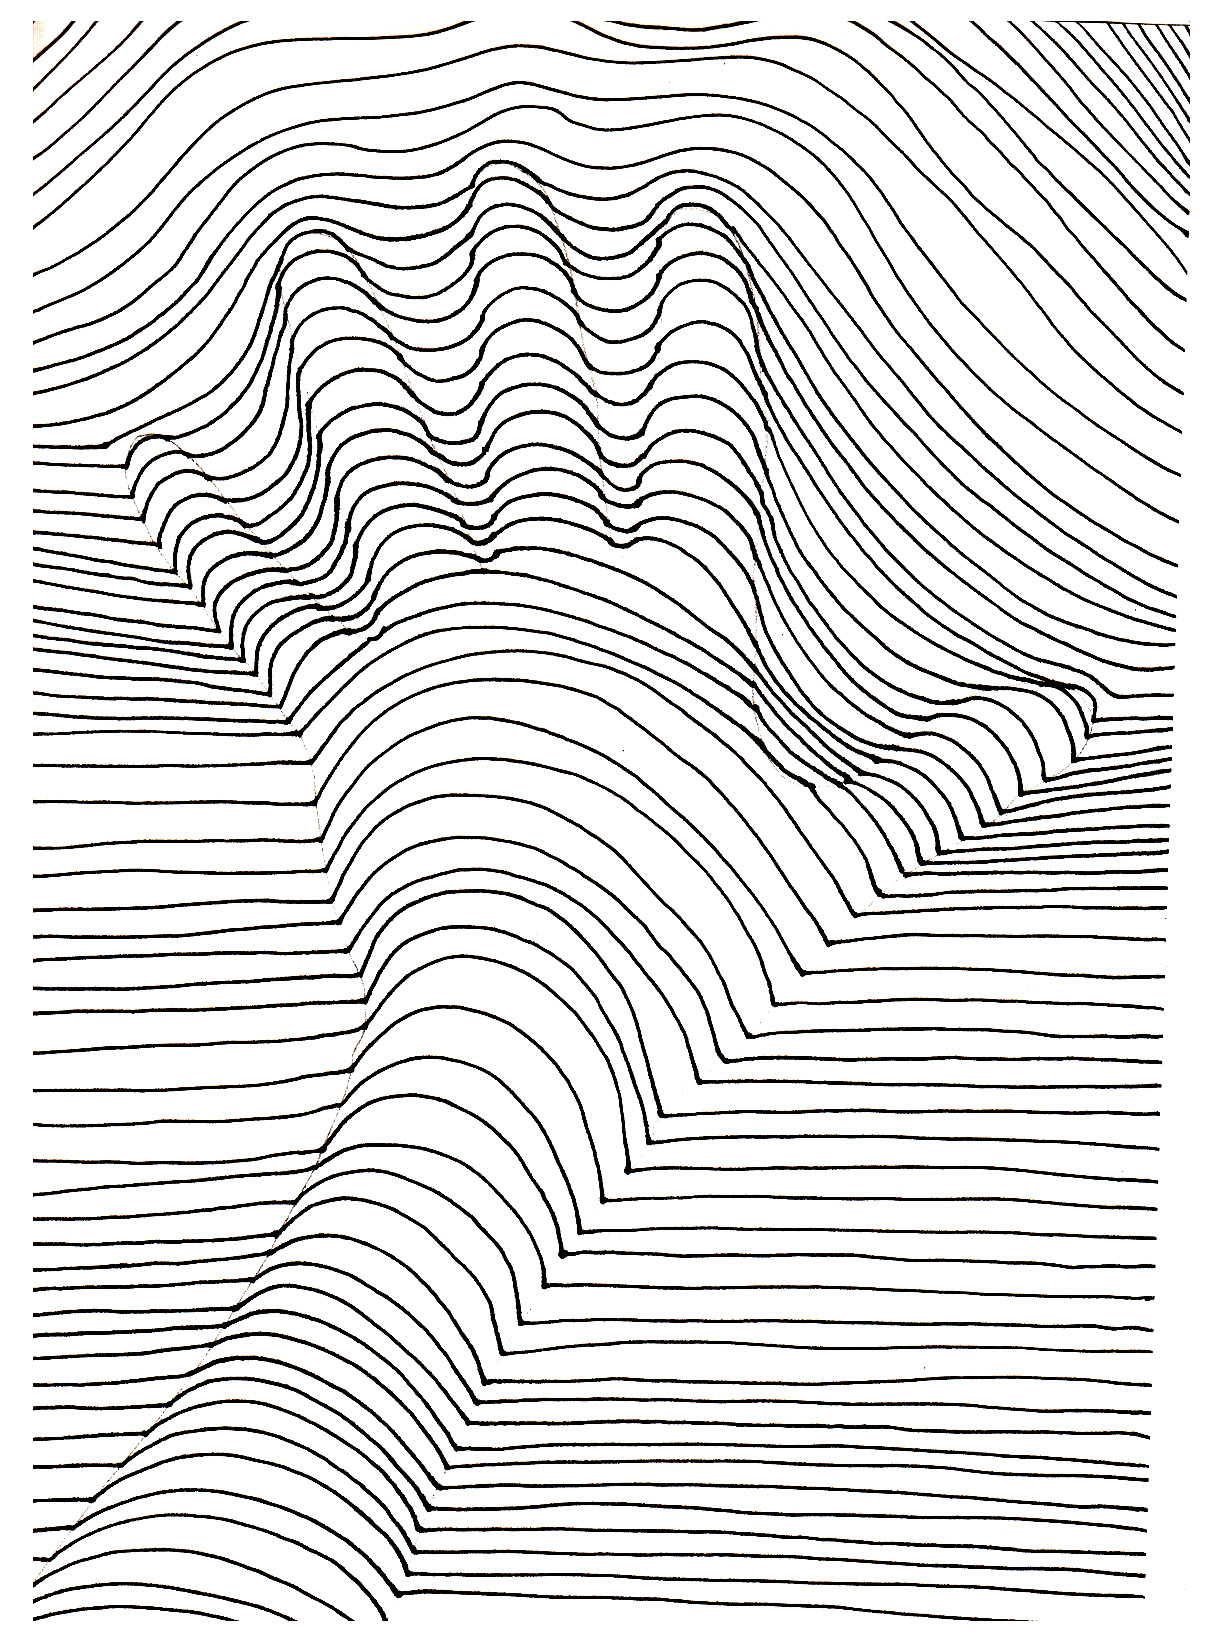 illusion line drawings